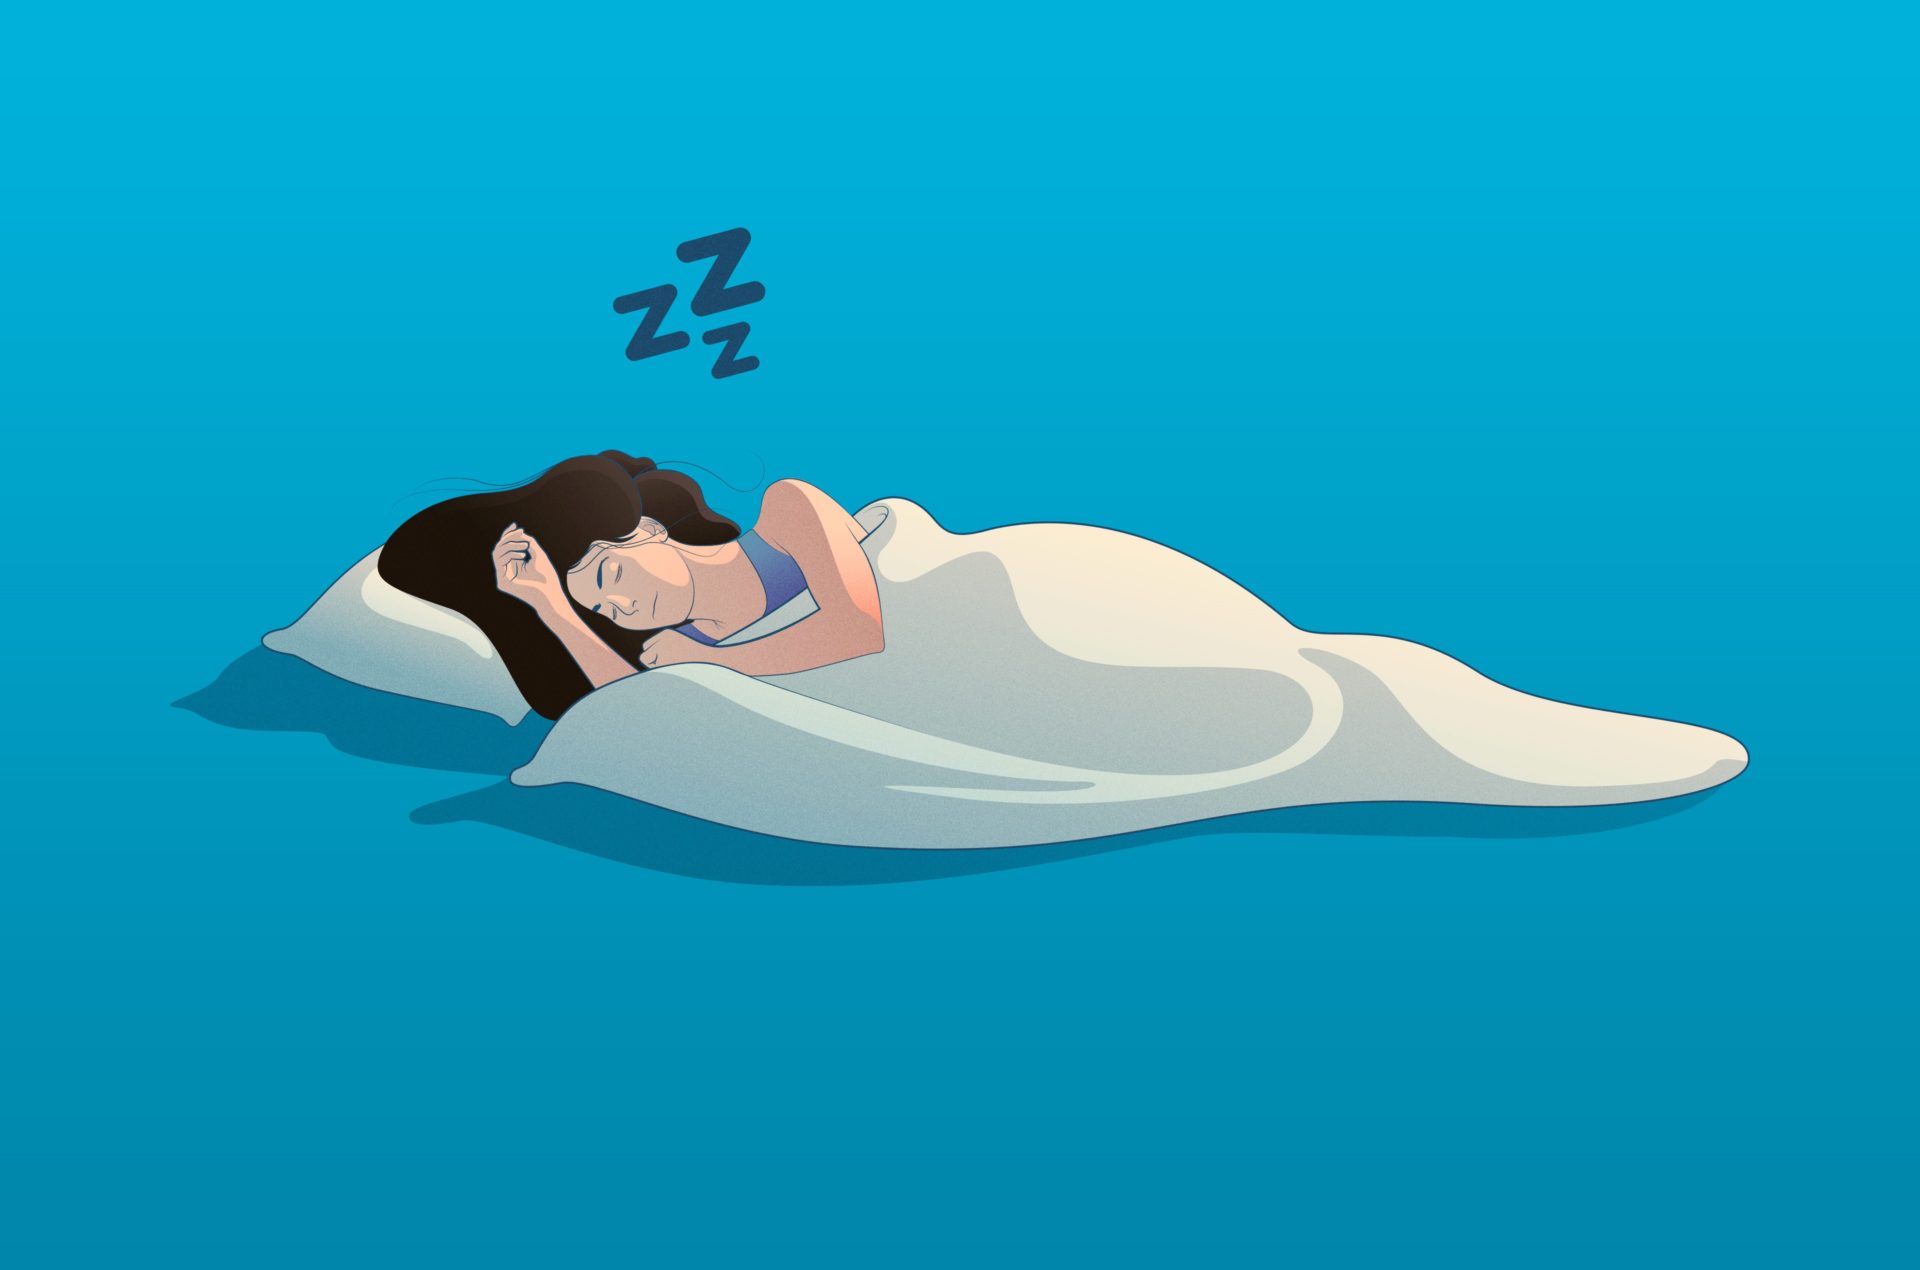 The social stigma of snoring among women: causes and risks - Sleep